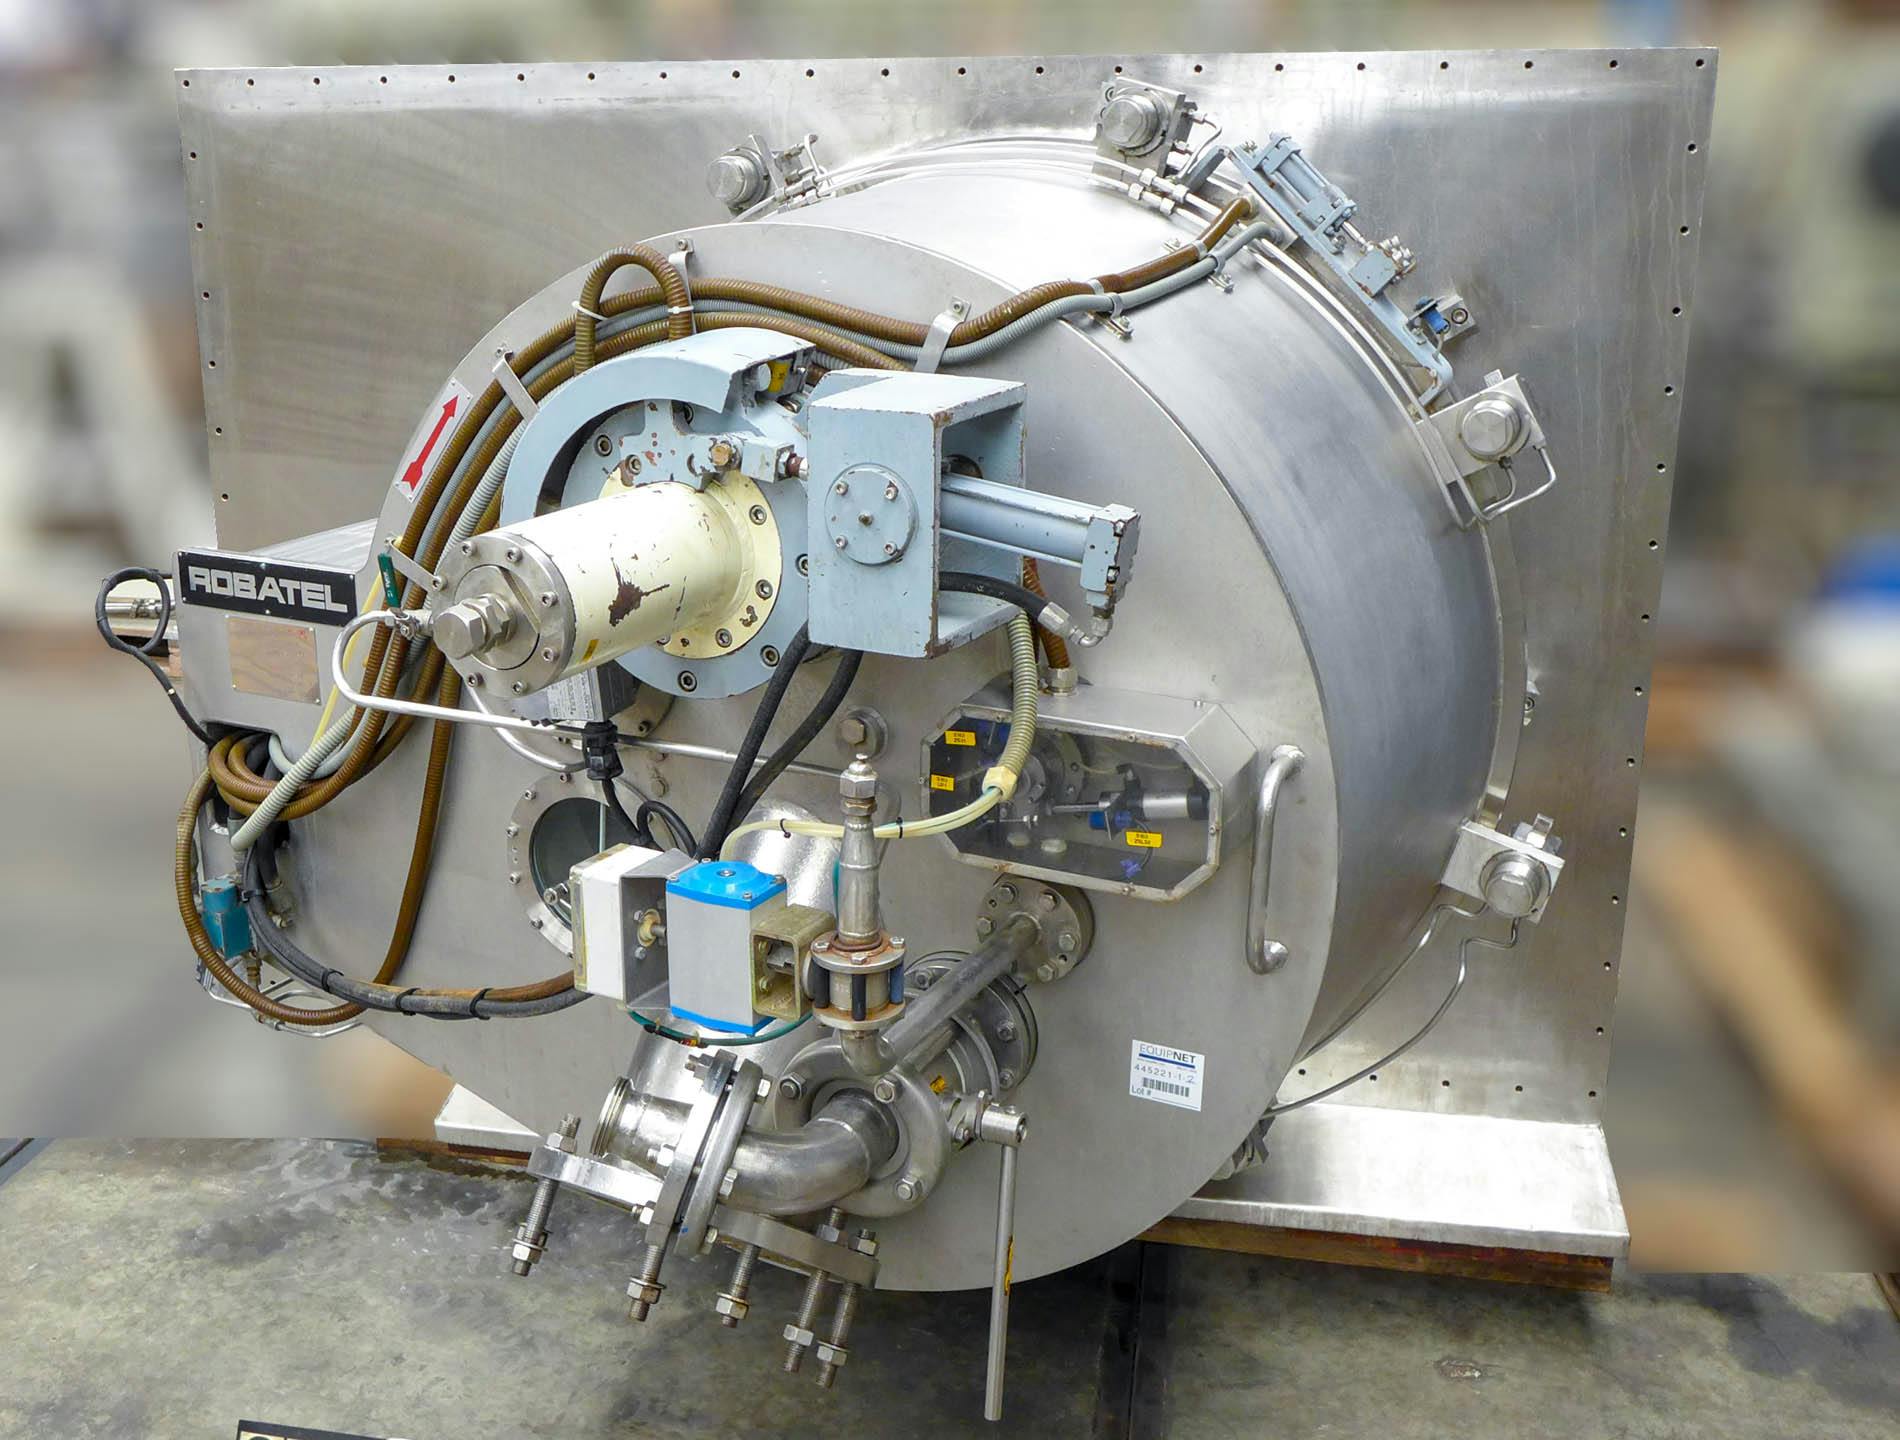 Robatel horizontal peeler centrifuge - Скоростная центрифуга - image 3